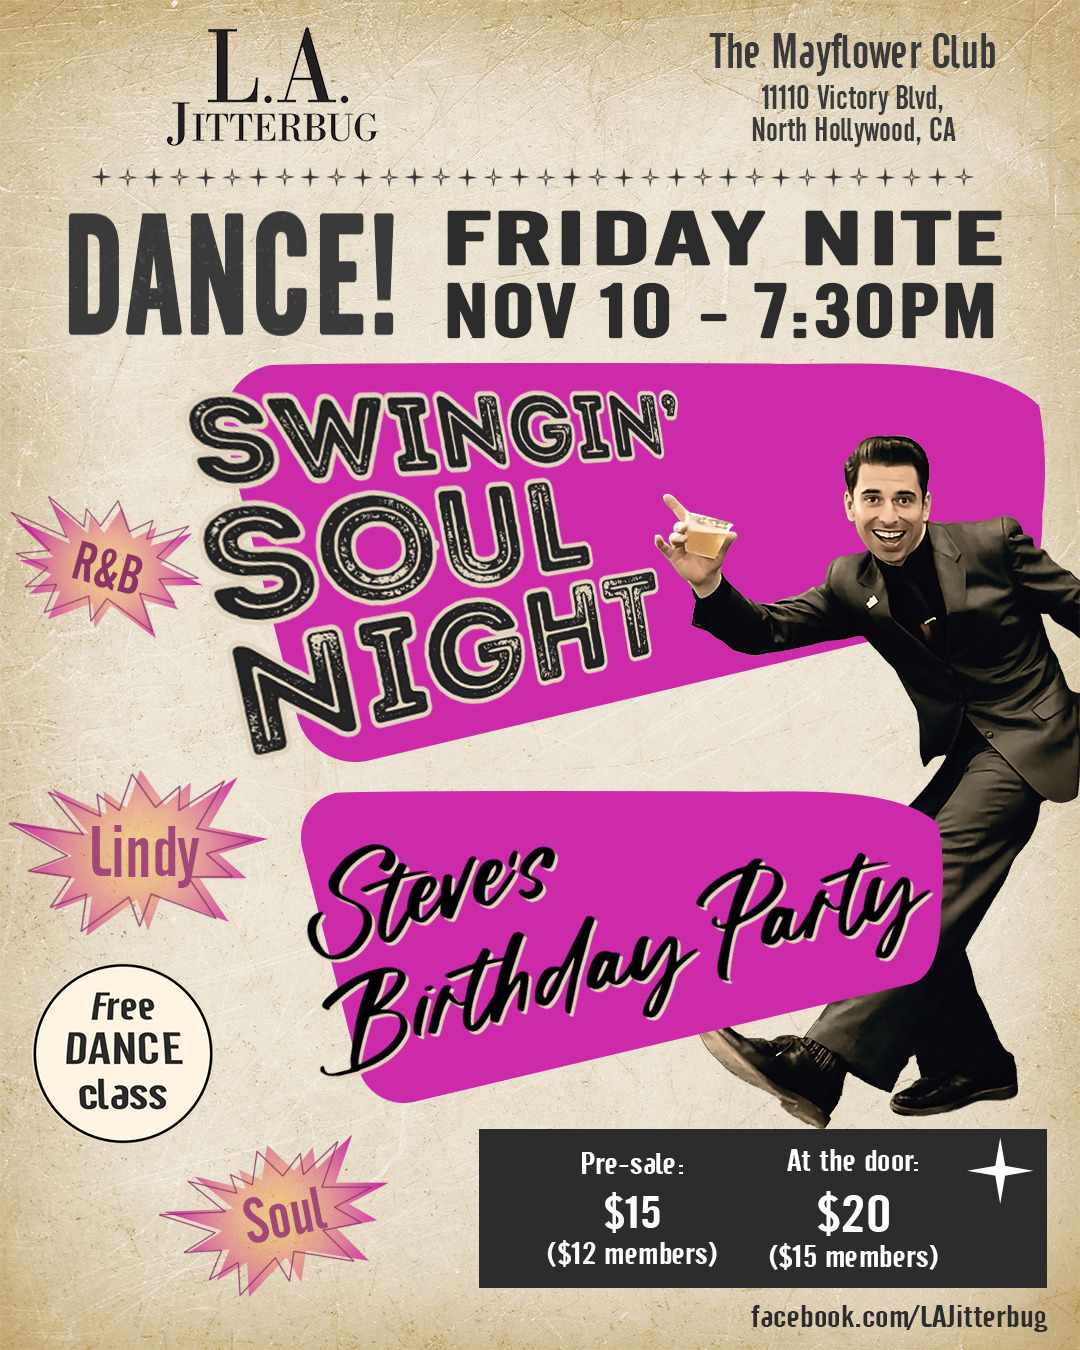 Swingin’ Soul Night – Steve’s Birthday!